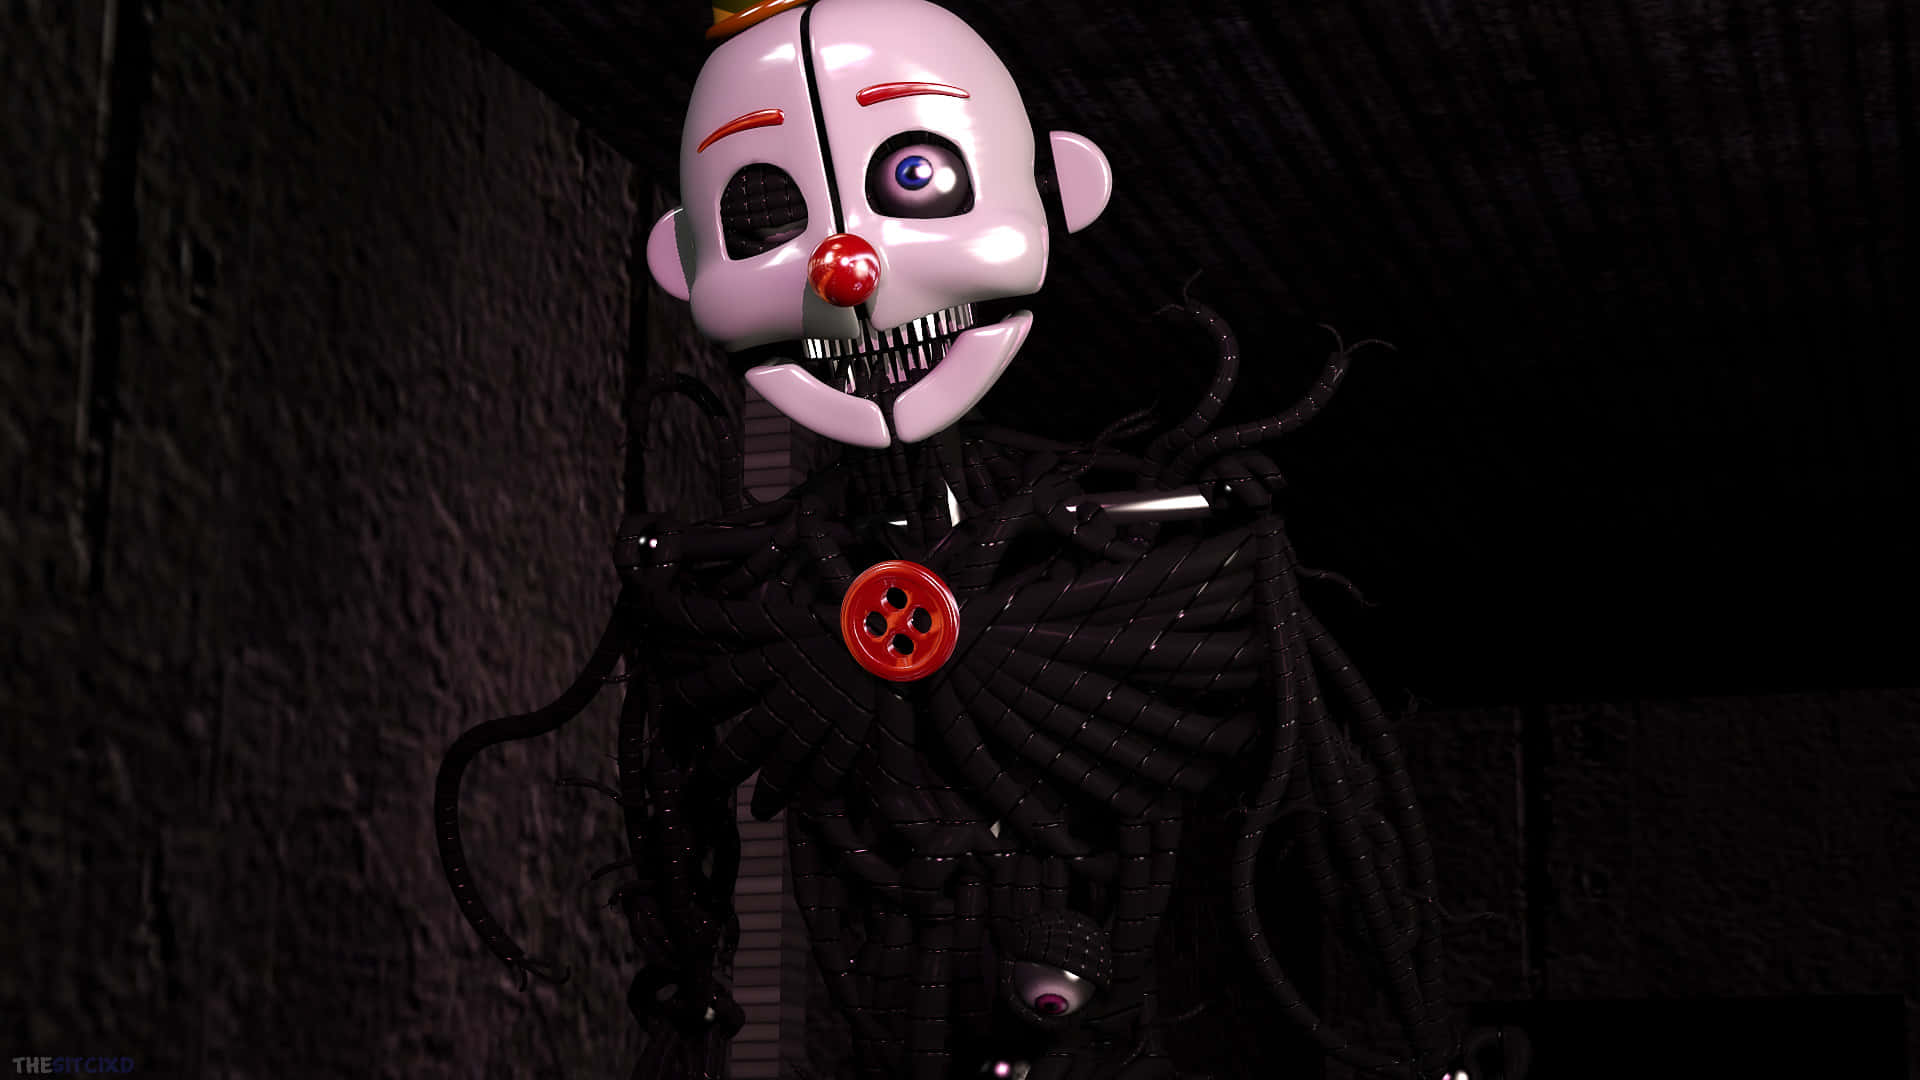 A Creepy Clown Standing In A Dark Room Wallpaper